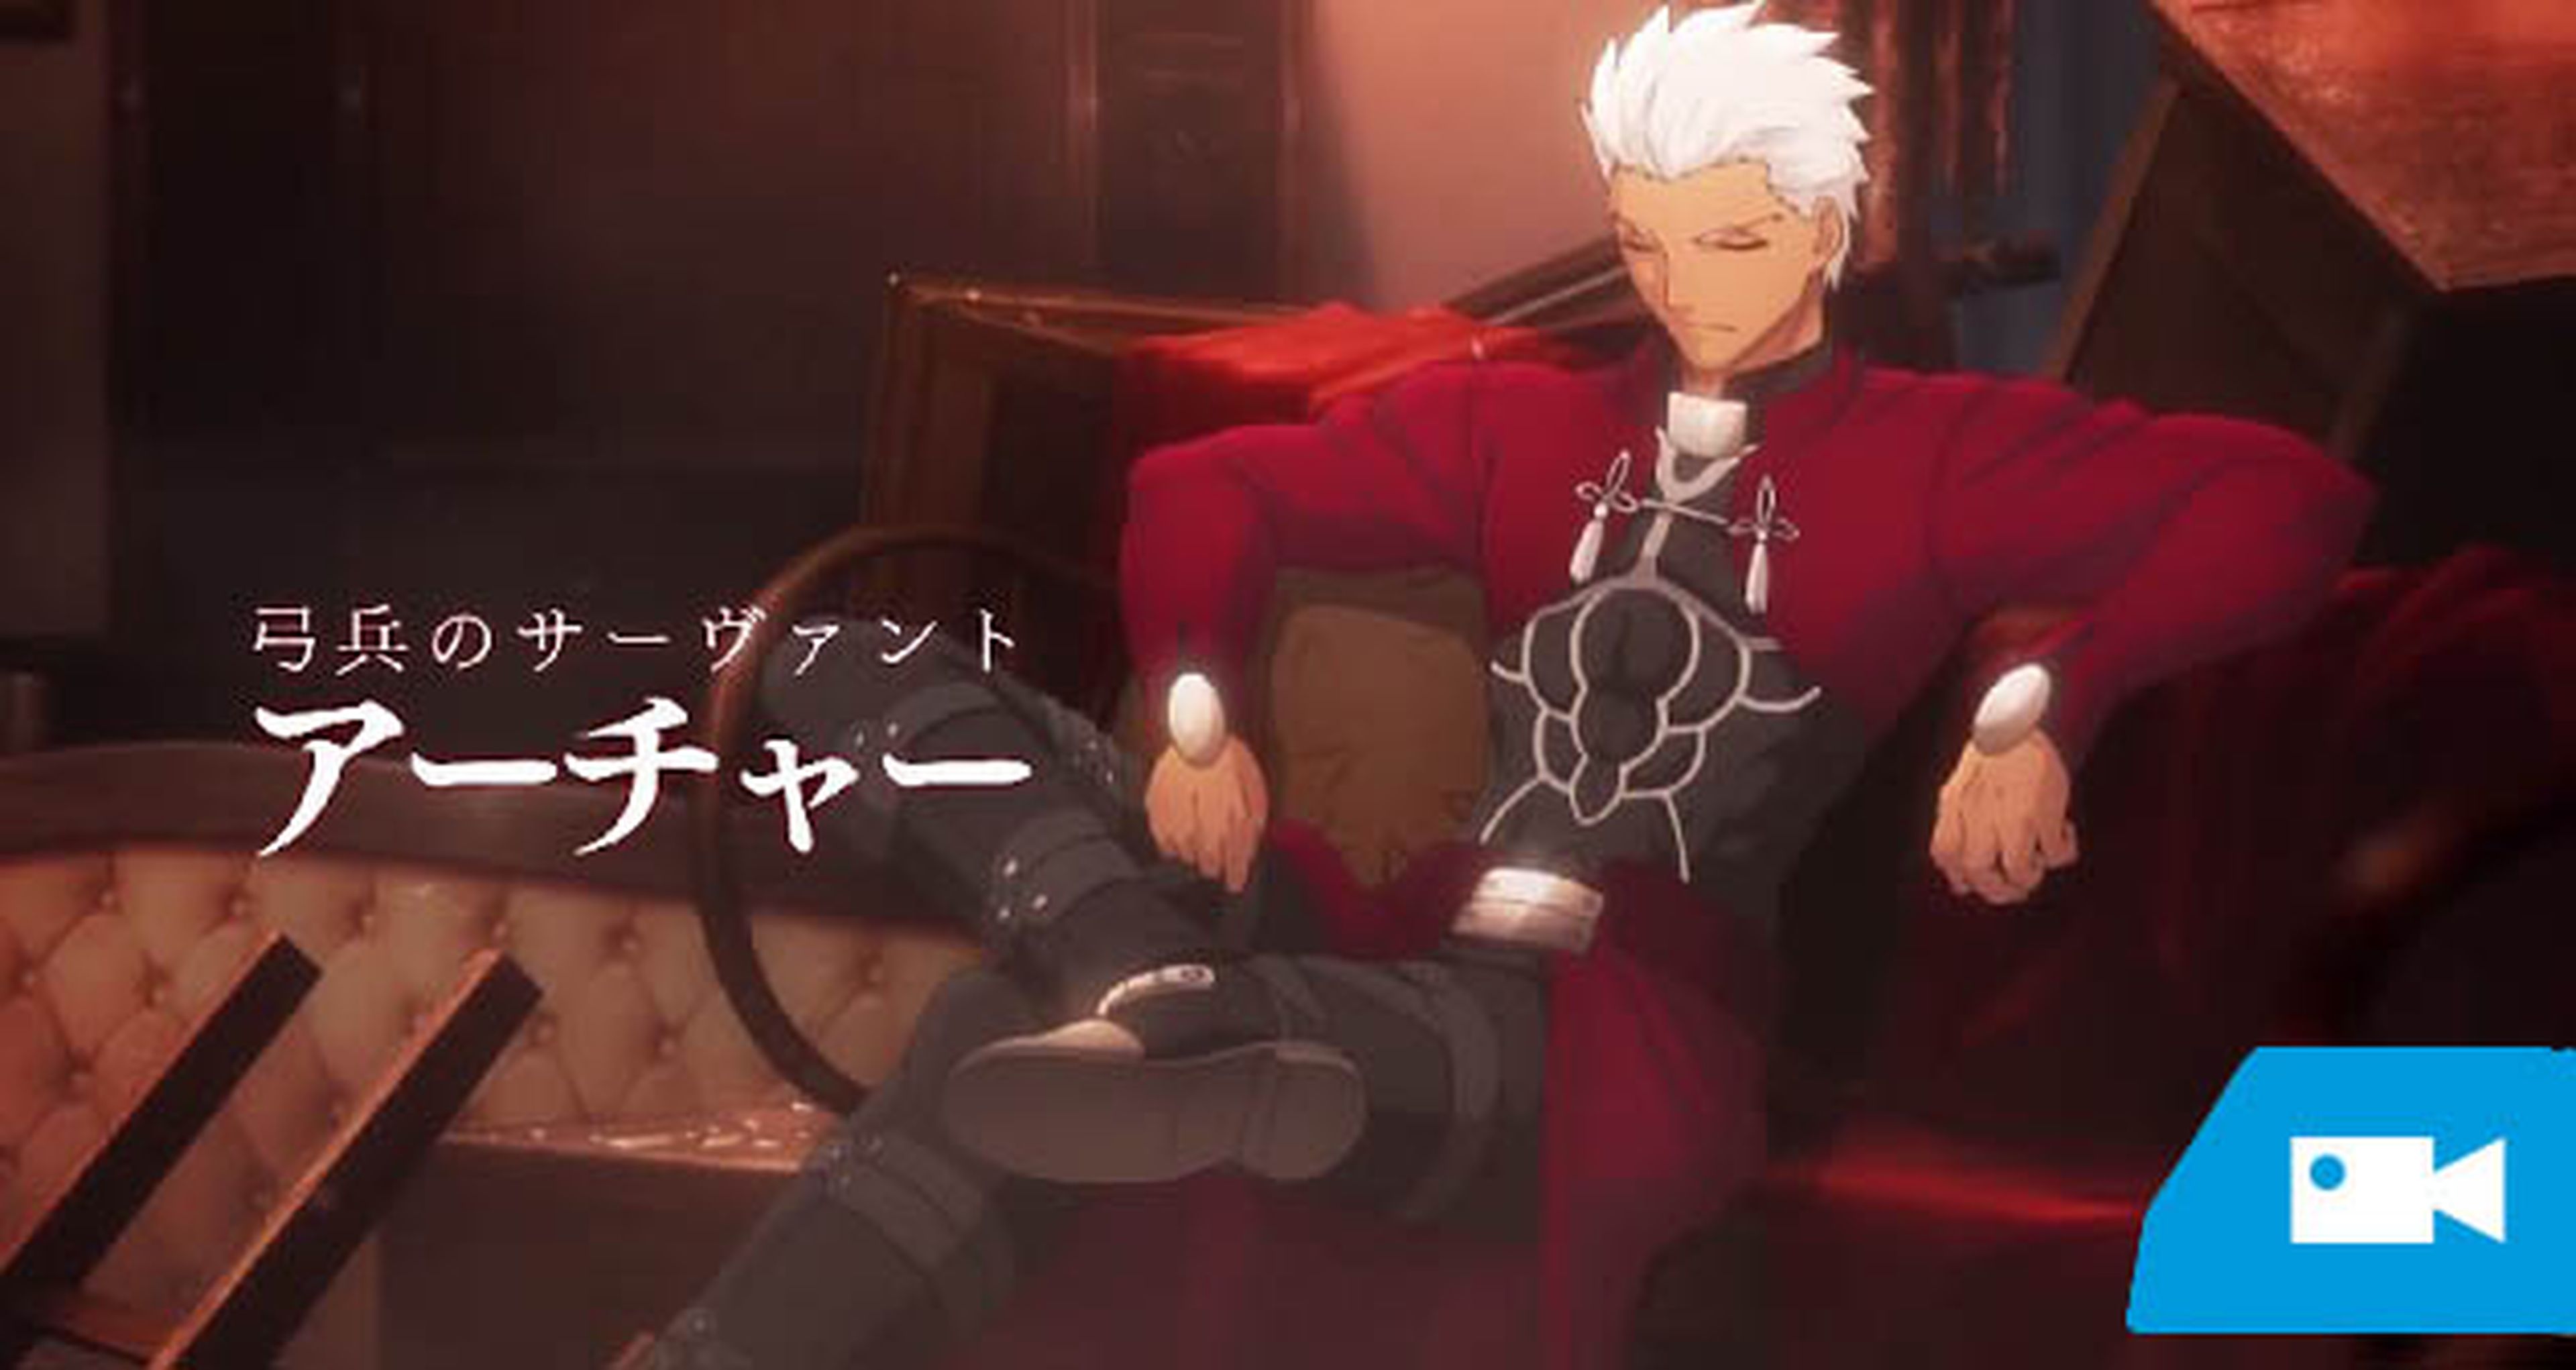 Archer protagoniza este spot de Fate/stay night